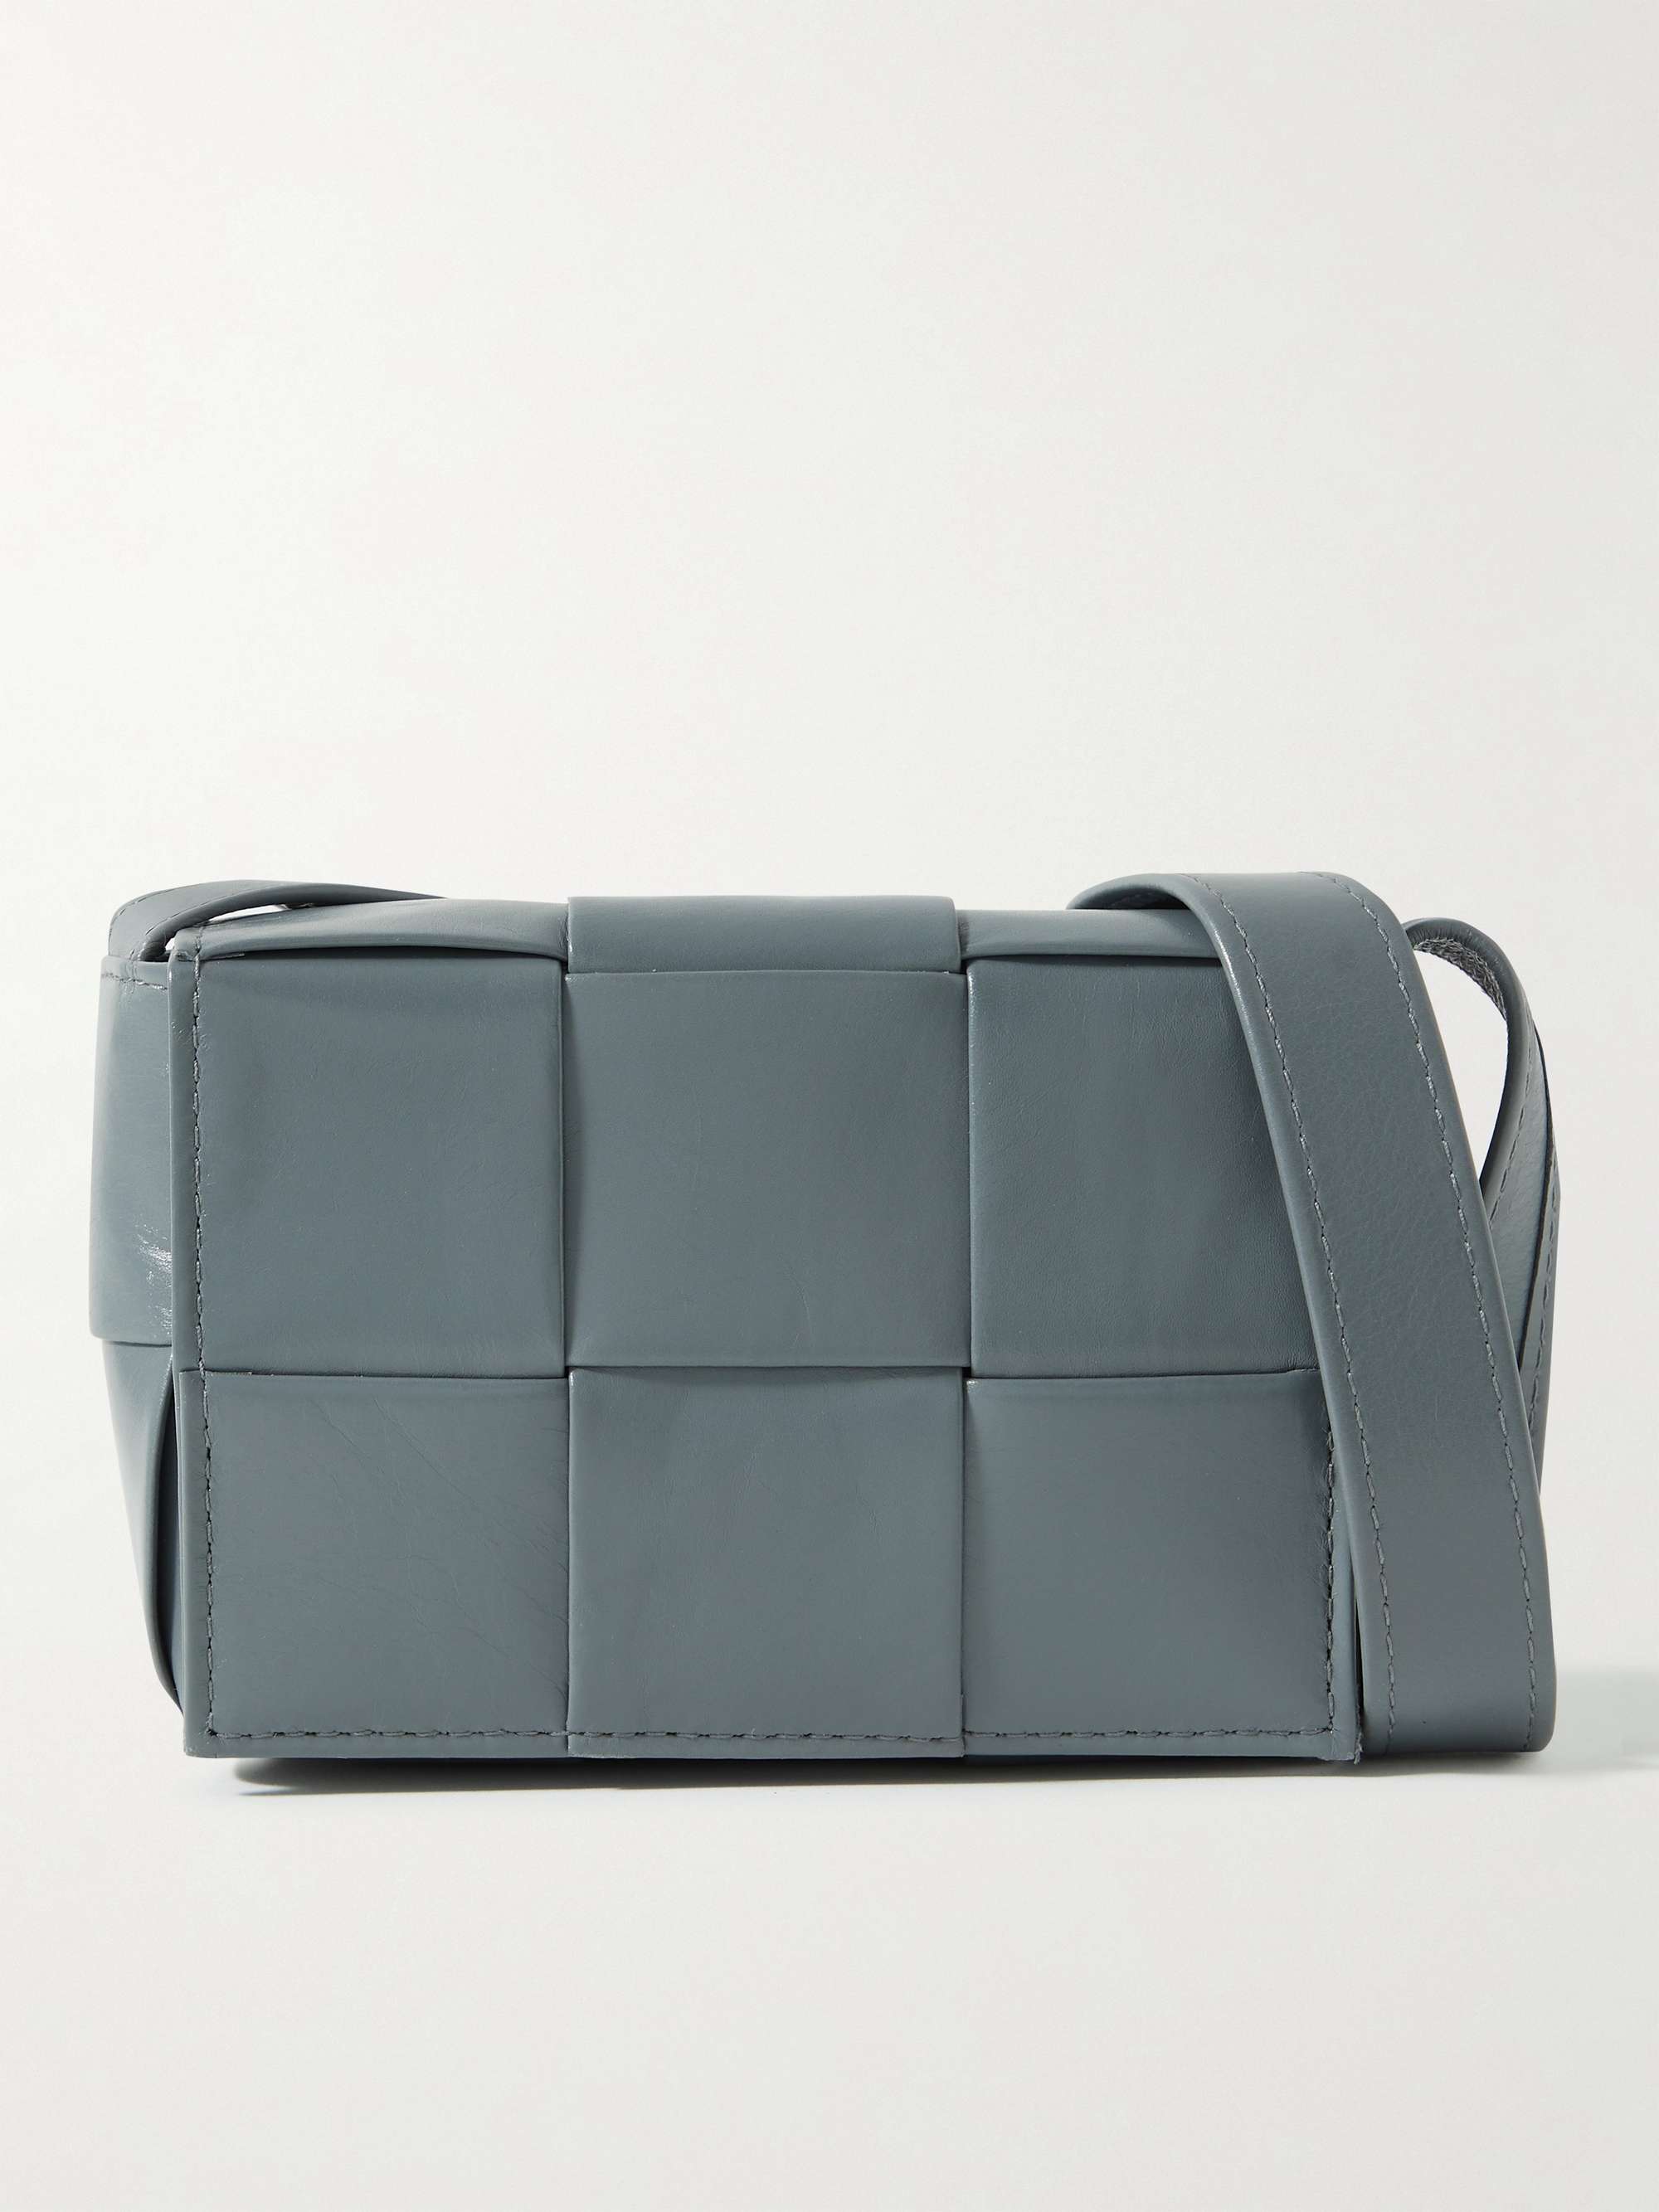 Bottega Veneta Men's Mini Intrecciato Leather Crossbody Bag